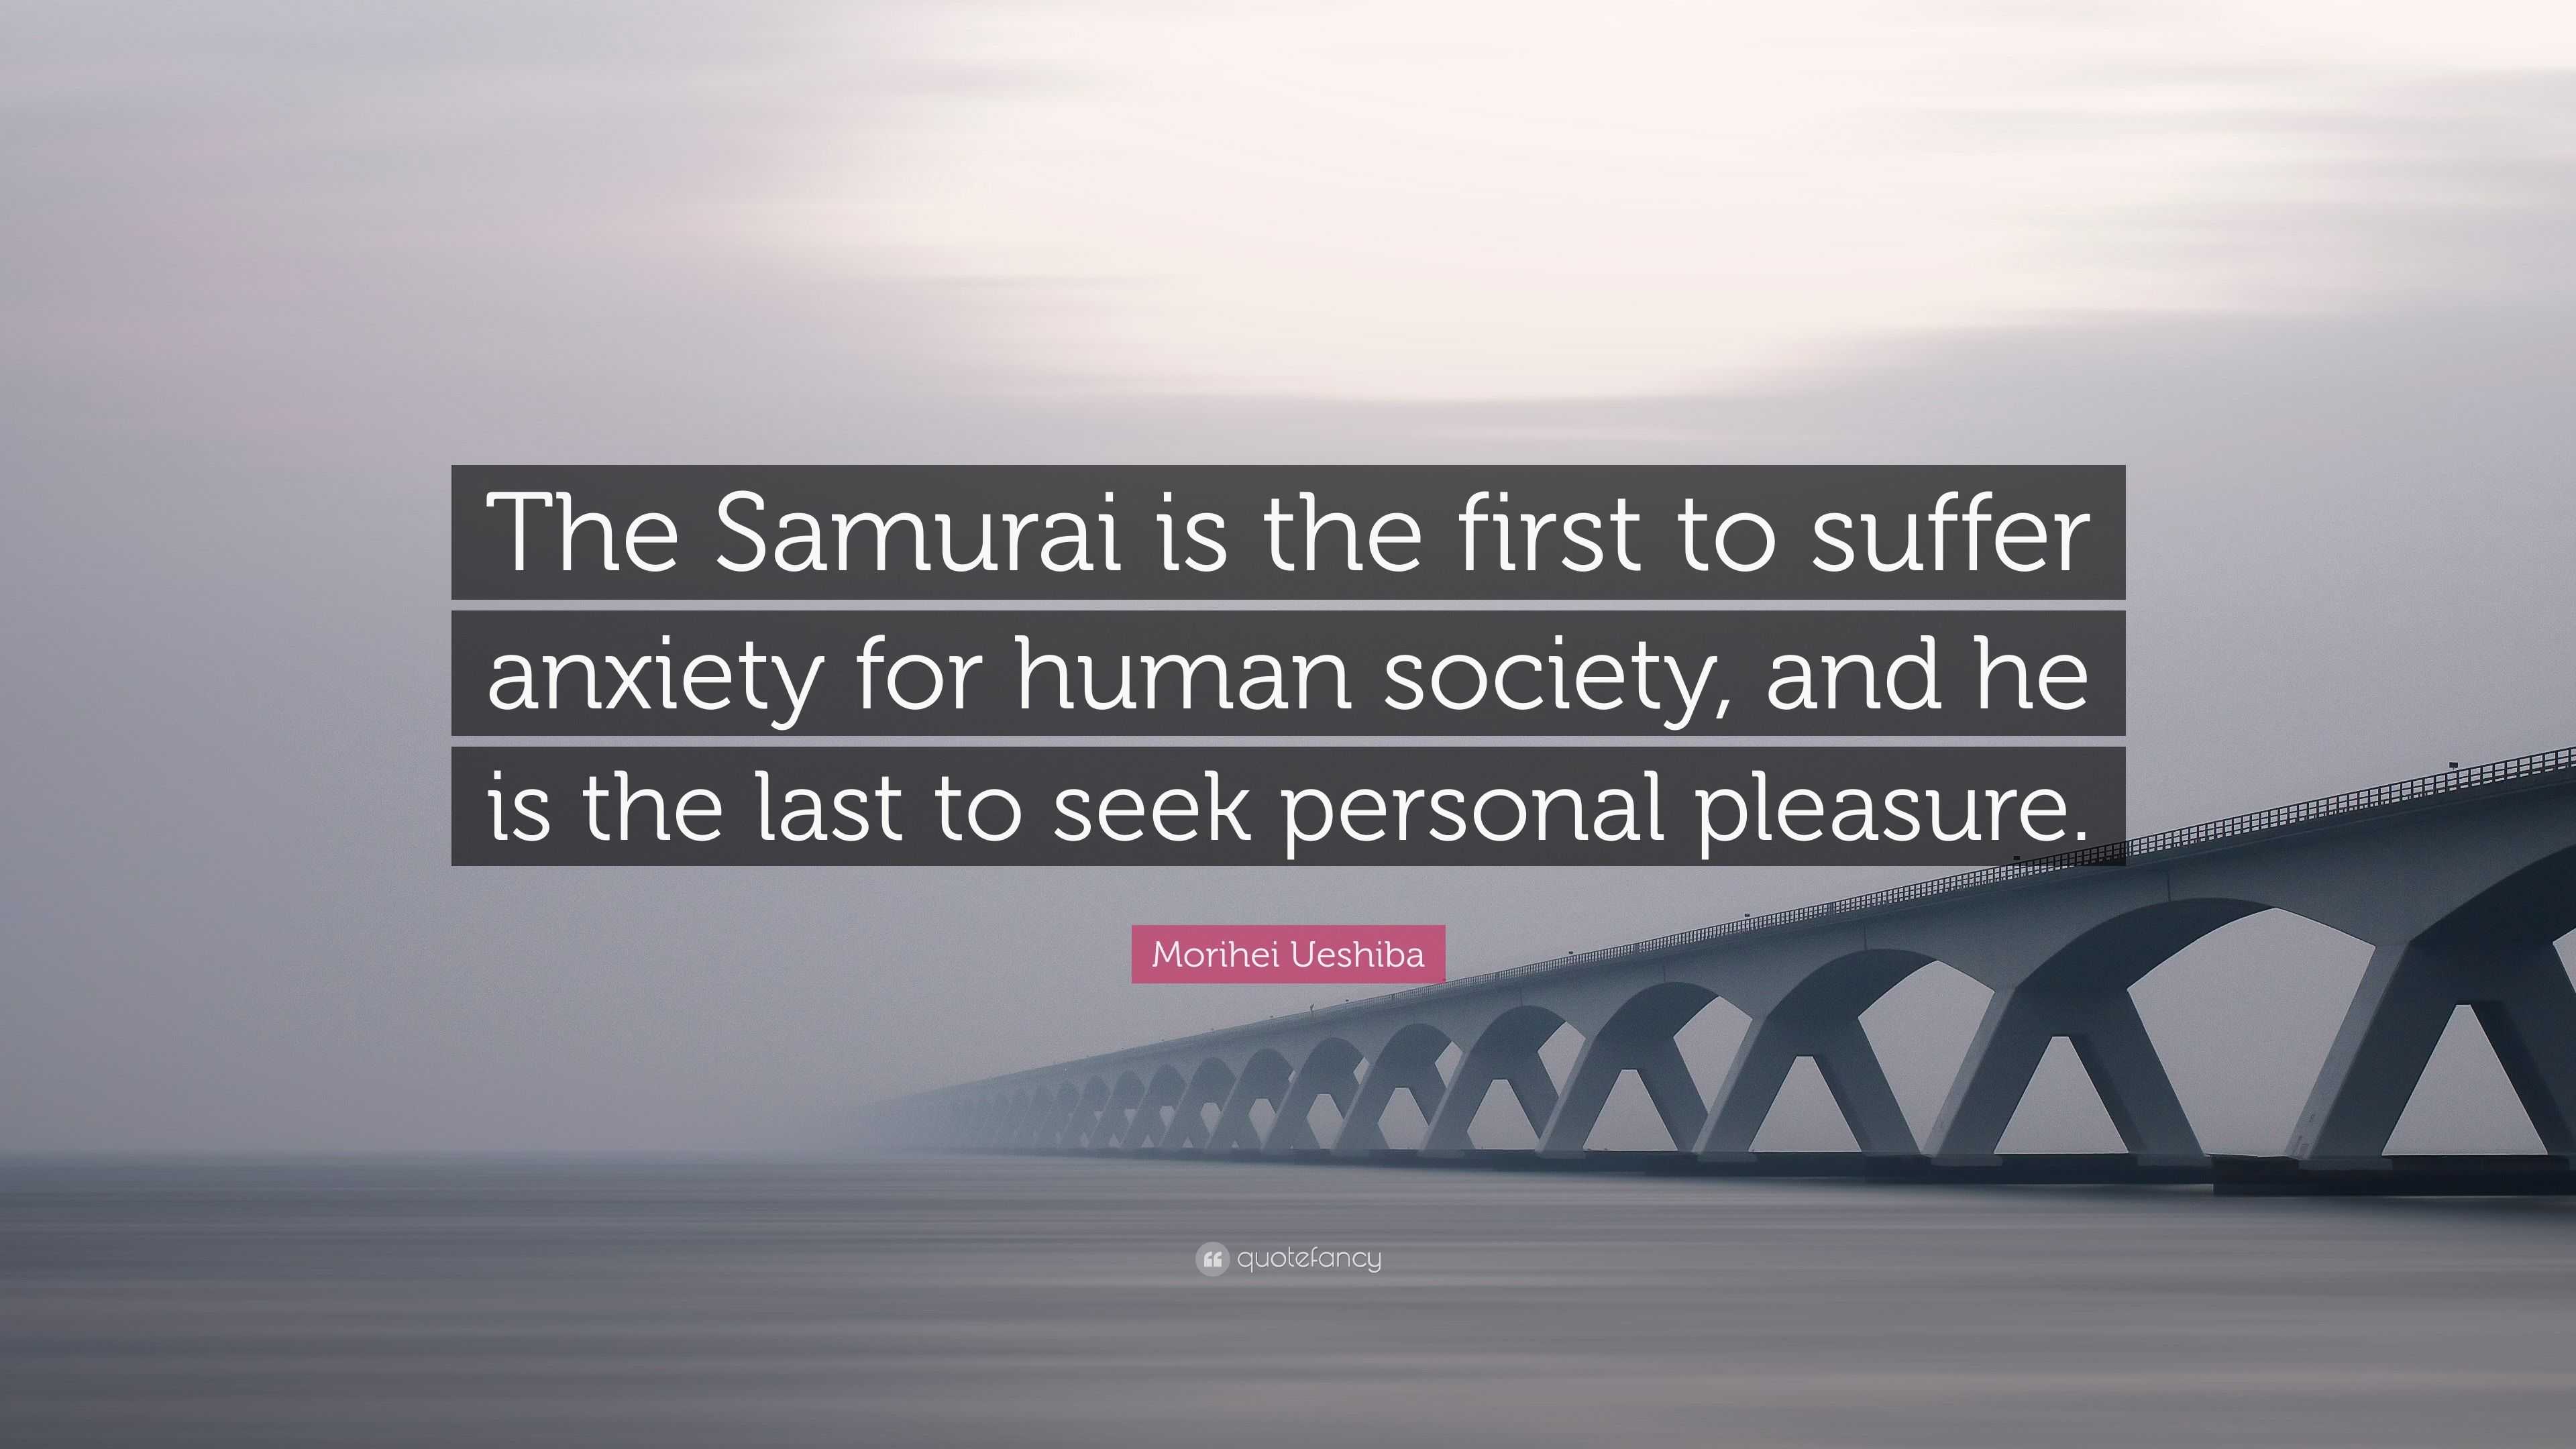 Morihei Ueshiba Quote: “The Samurai is